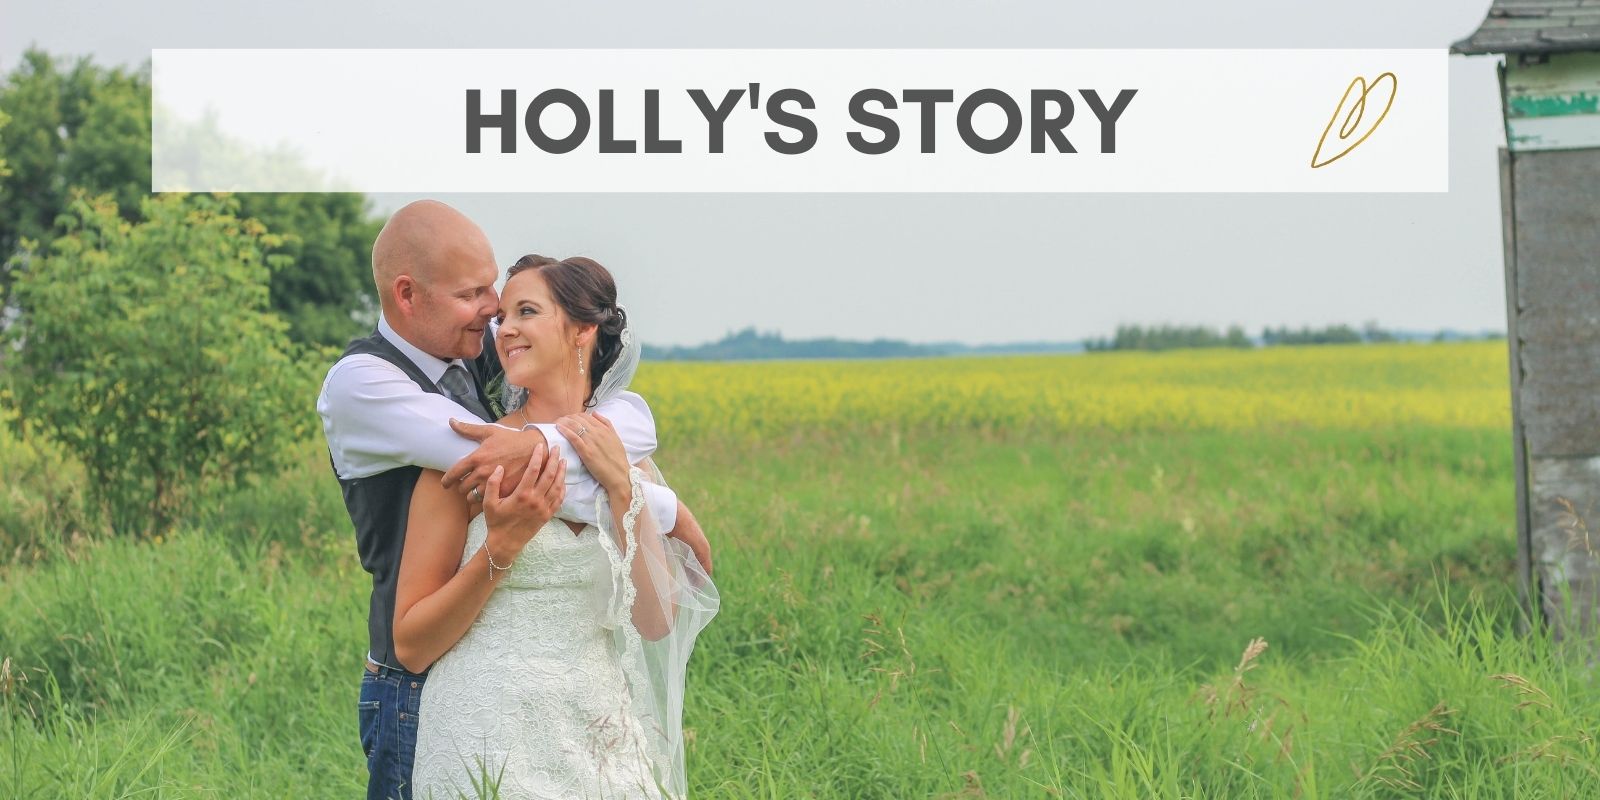 Holly's Story